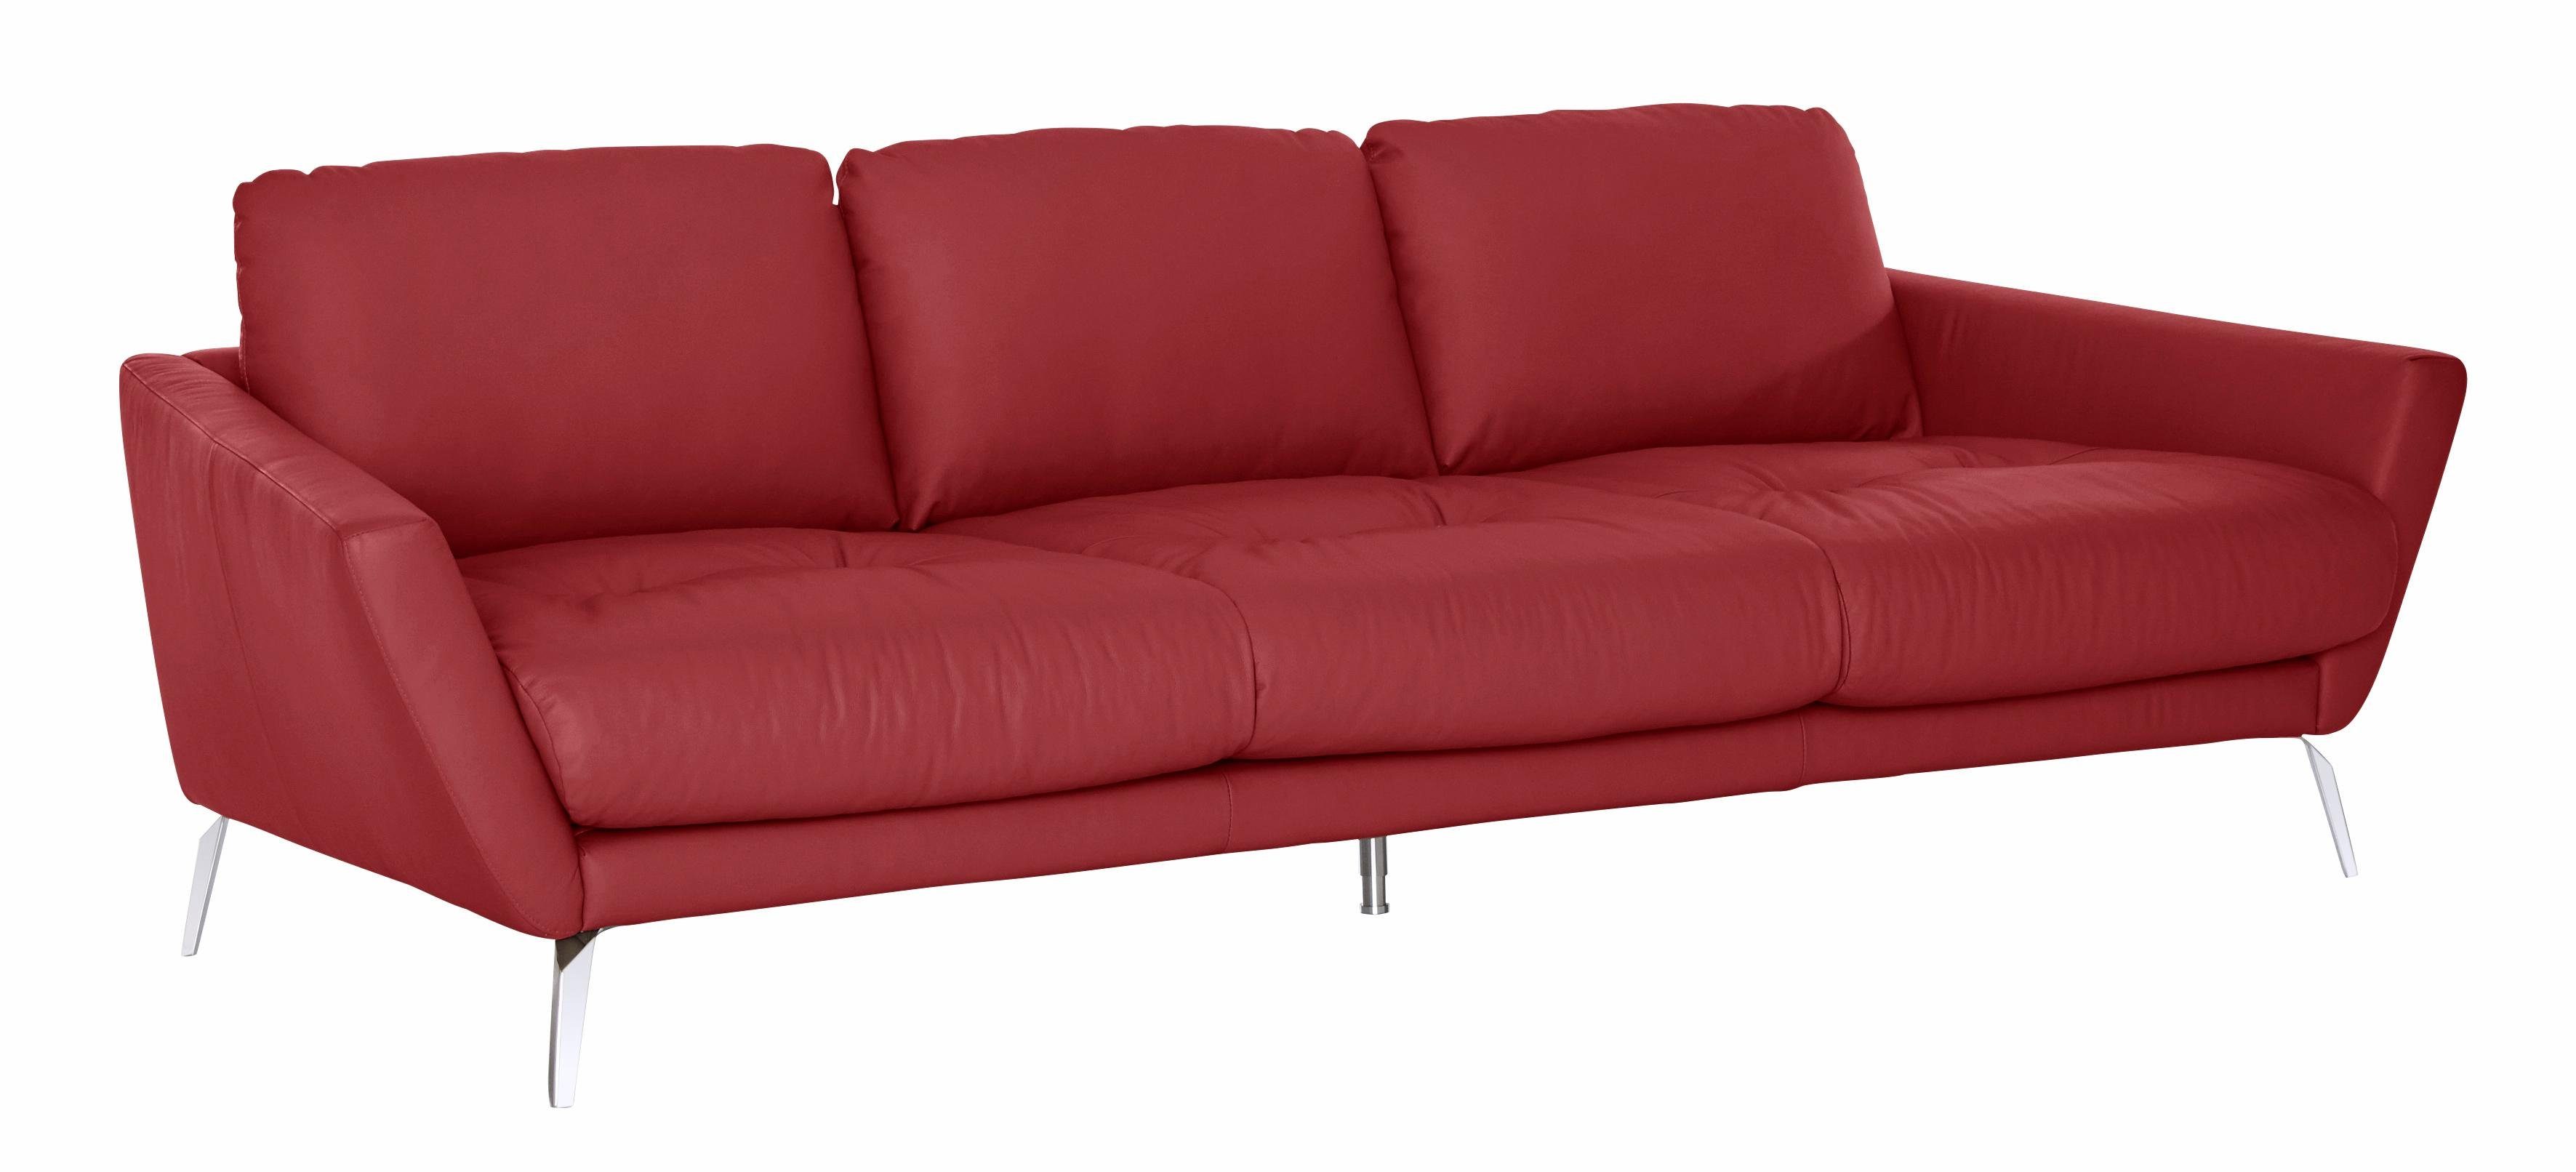 W.SCHILLIG Sitz, im Chrom mit Big-Sofa glänzend dekorativer Heftung Füße softy,